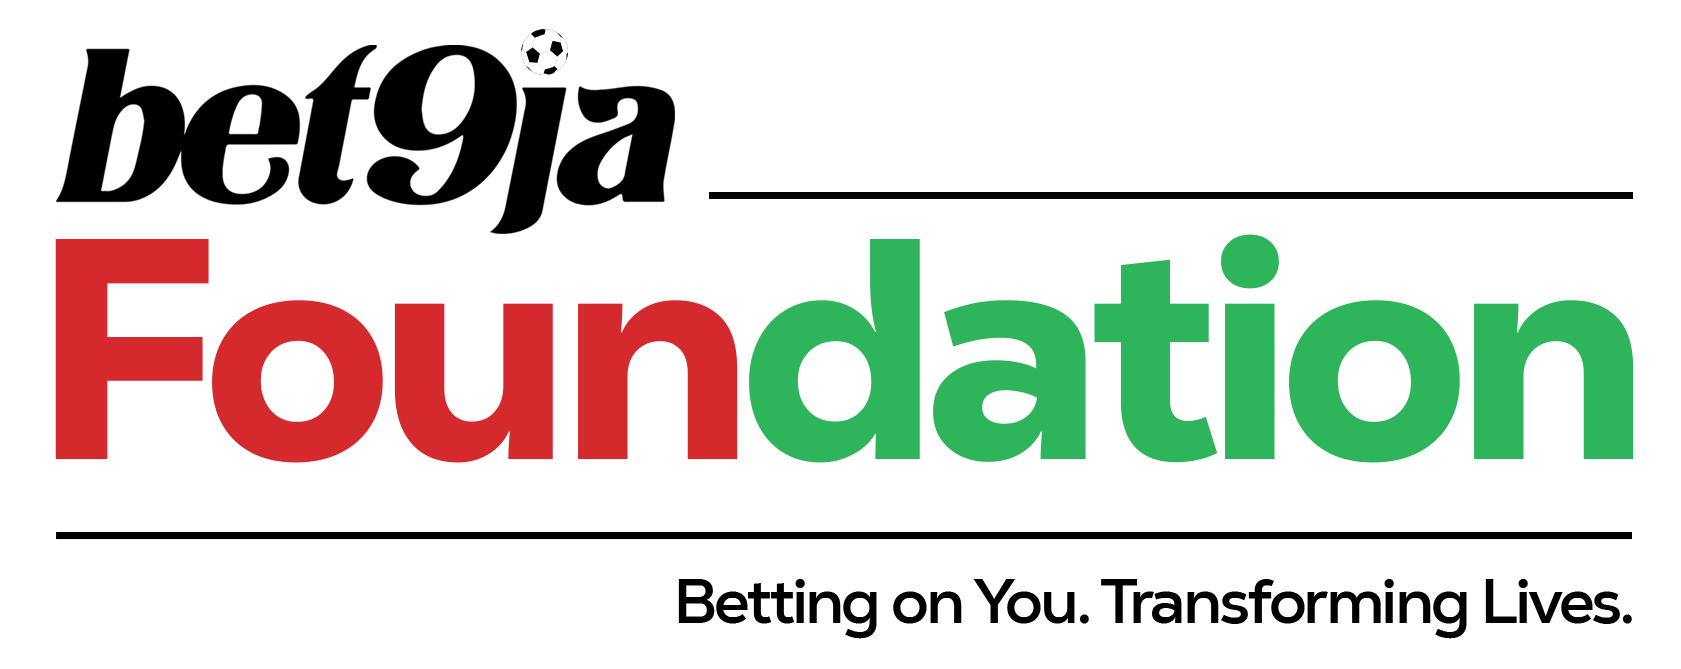 Bet9ja Foundation Logo